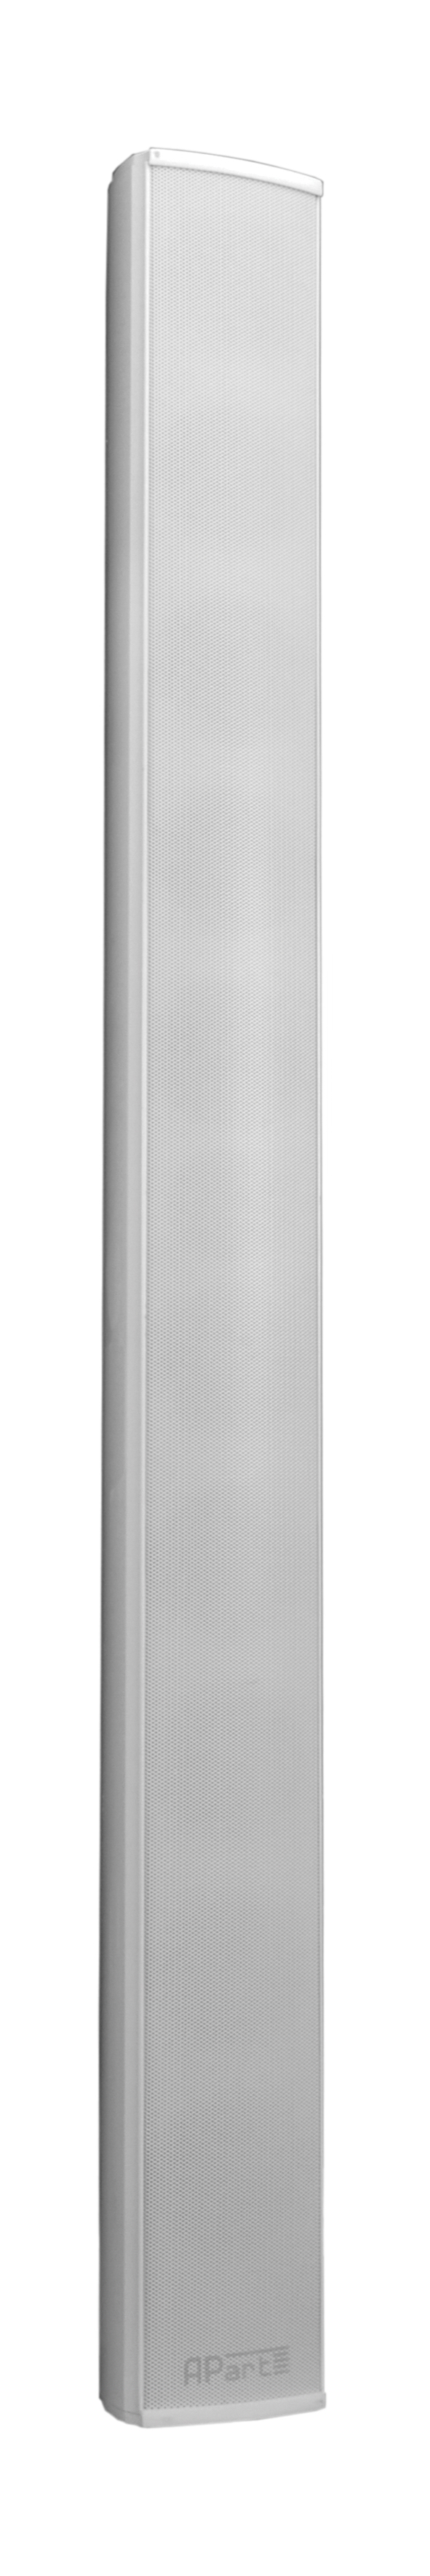 Biamp Desono COLW101 - 2-Wege 10 x 3,3 Säulenlautsprecher